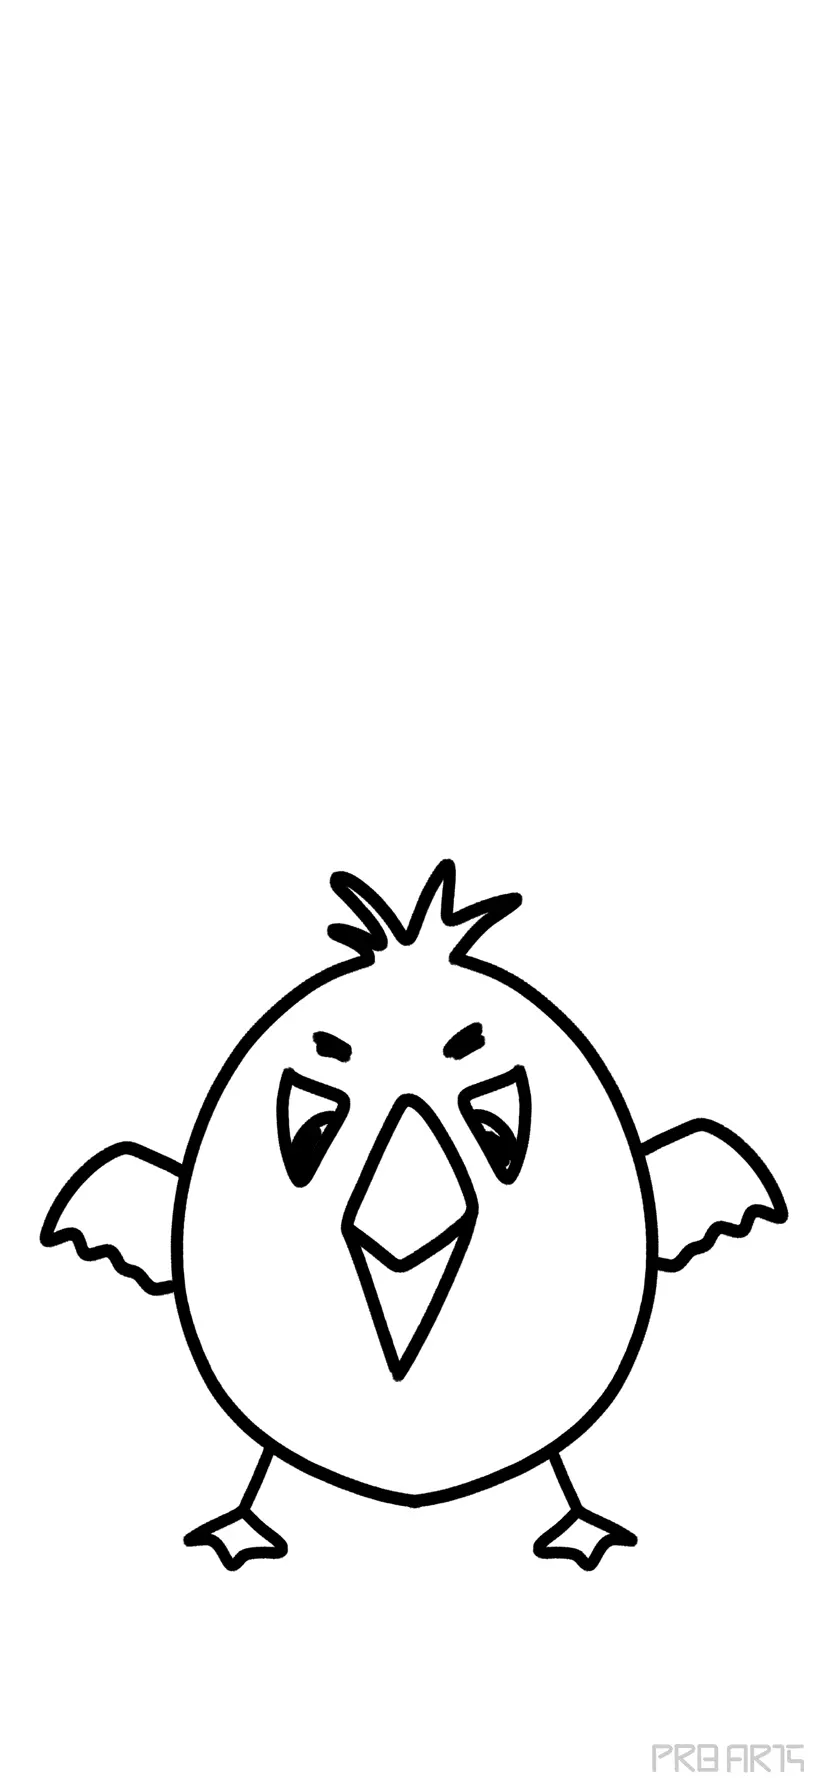 Cute Cartoon Bird Chick Drawing for Kids - PRB ARTS